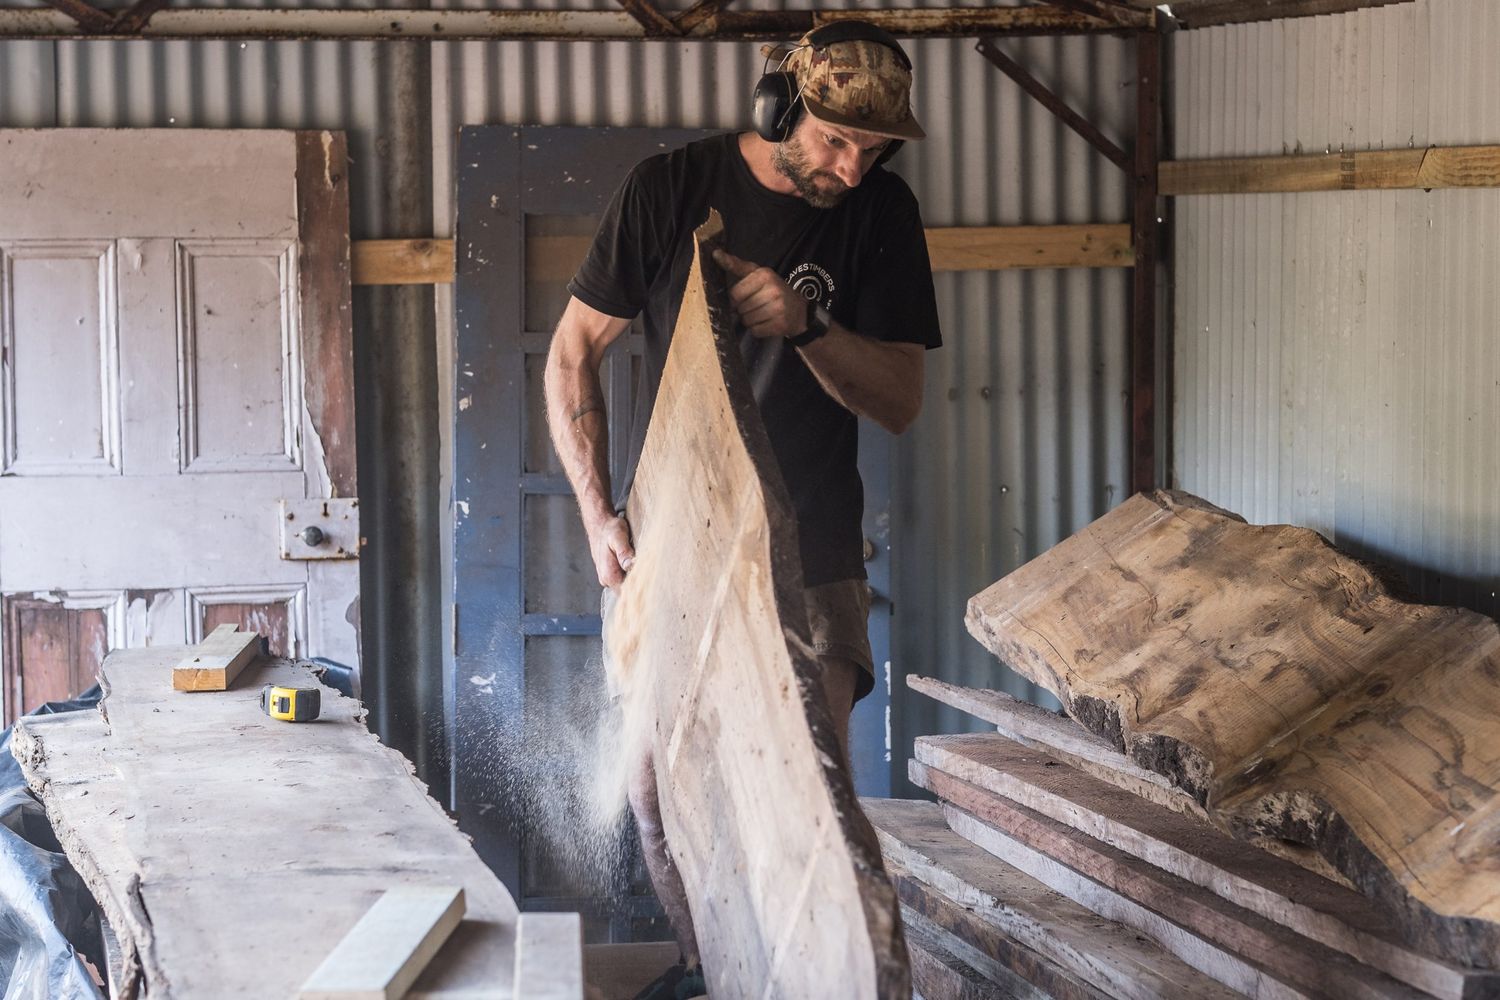 Studio Visit: Margaret River Region's Dedicated Woodworkers